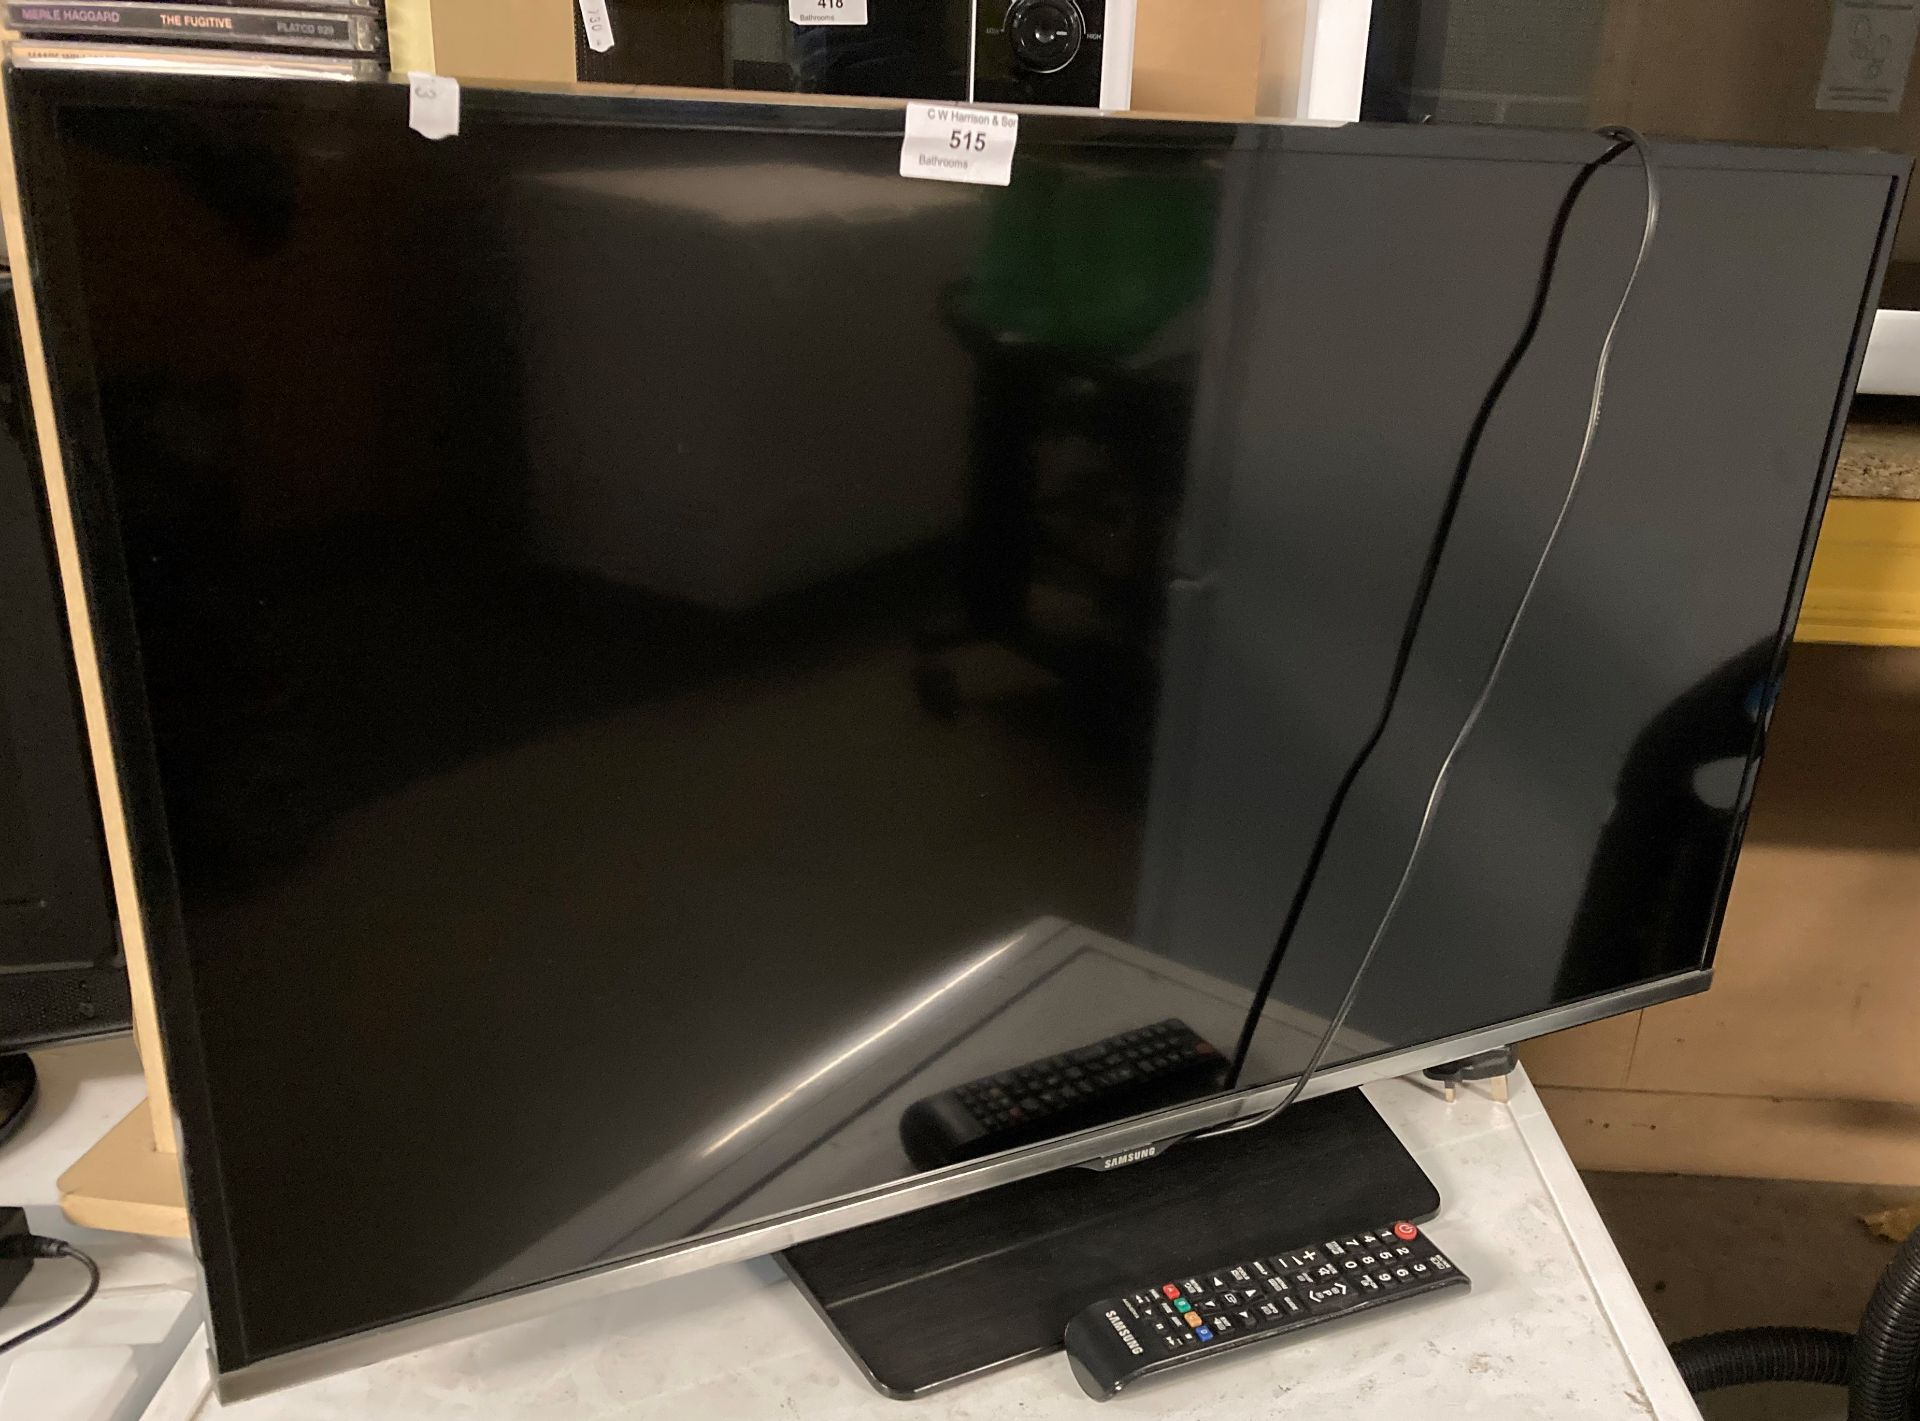 Samsung UE32H5000AK LED TV complete with remote (saleroom location: PO)